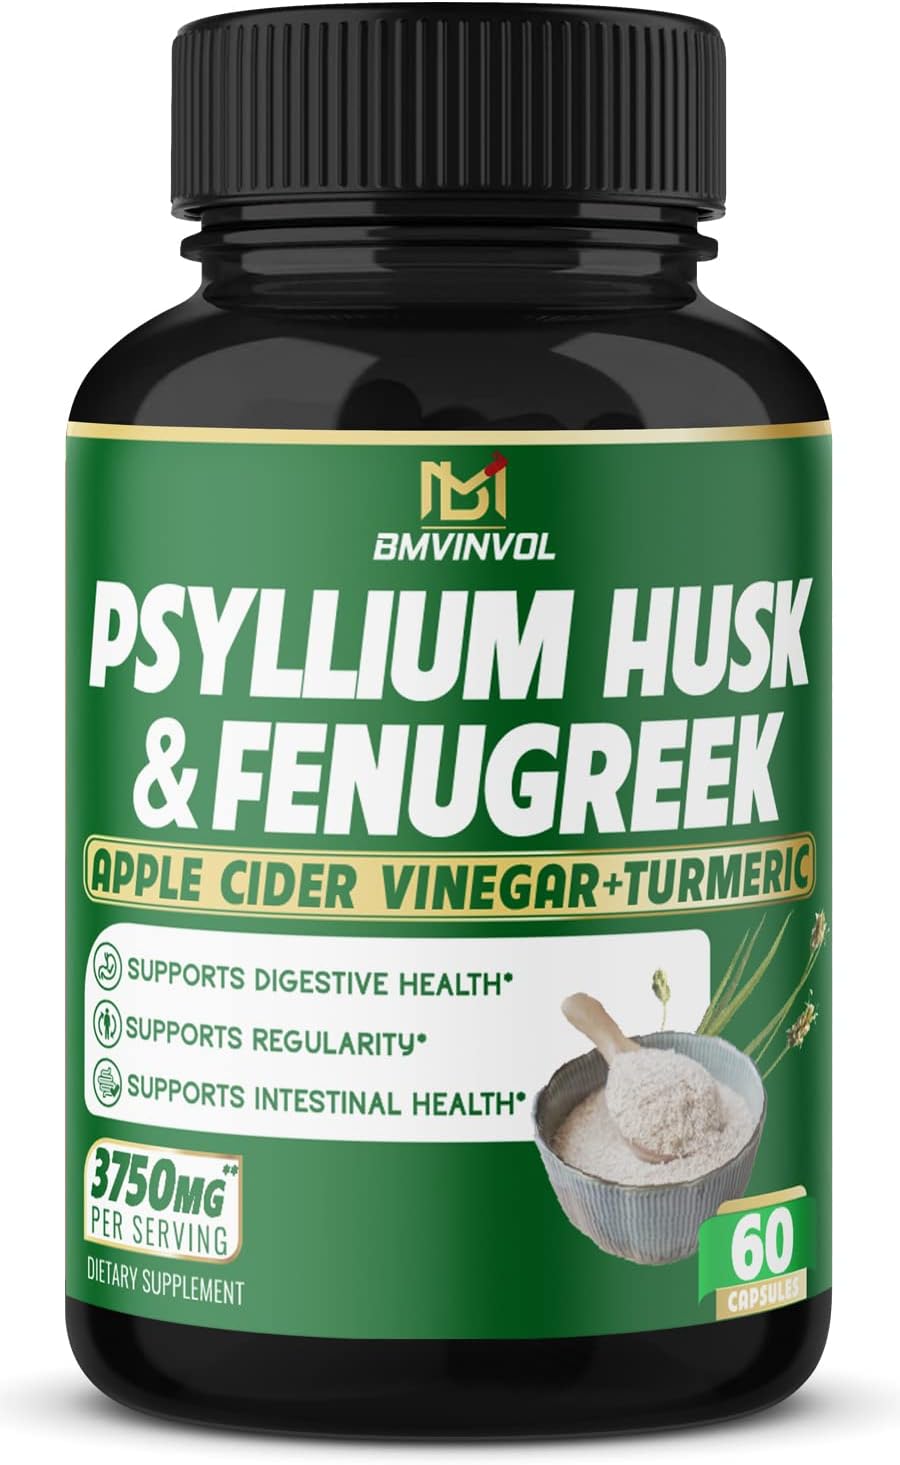 BMVINVOL Psyllium Husk Capsules 3750mg - Fenugreek, Apple Cider Vinegar, Turmeric - Fiber Supplement for Supports Digestive Health & Regularity (60Count)